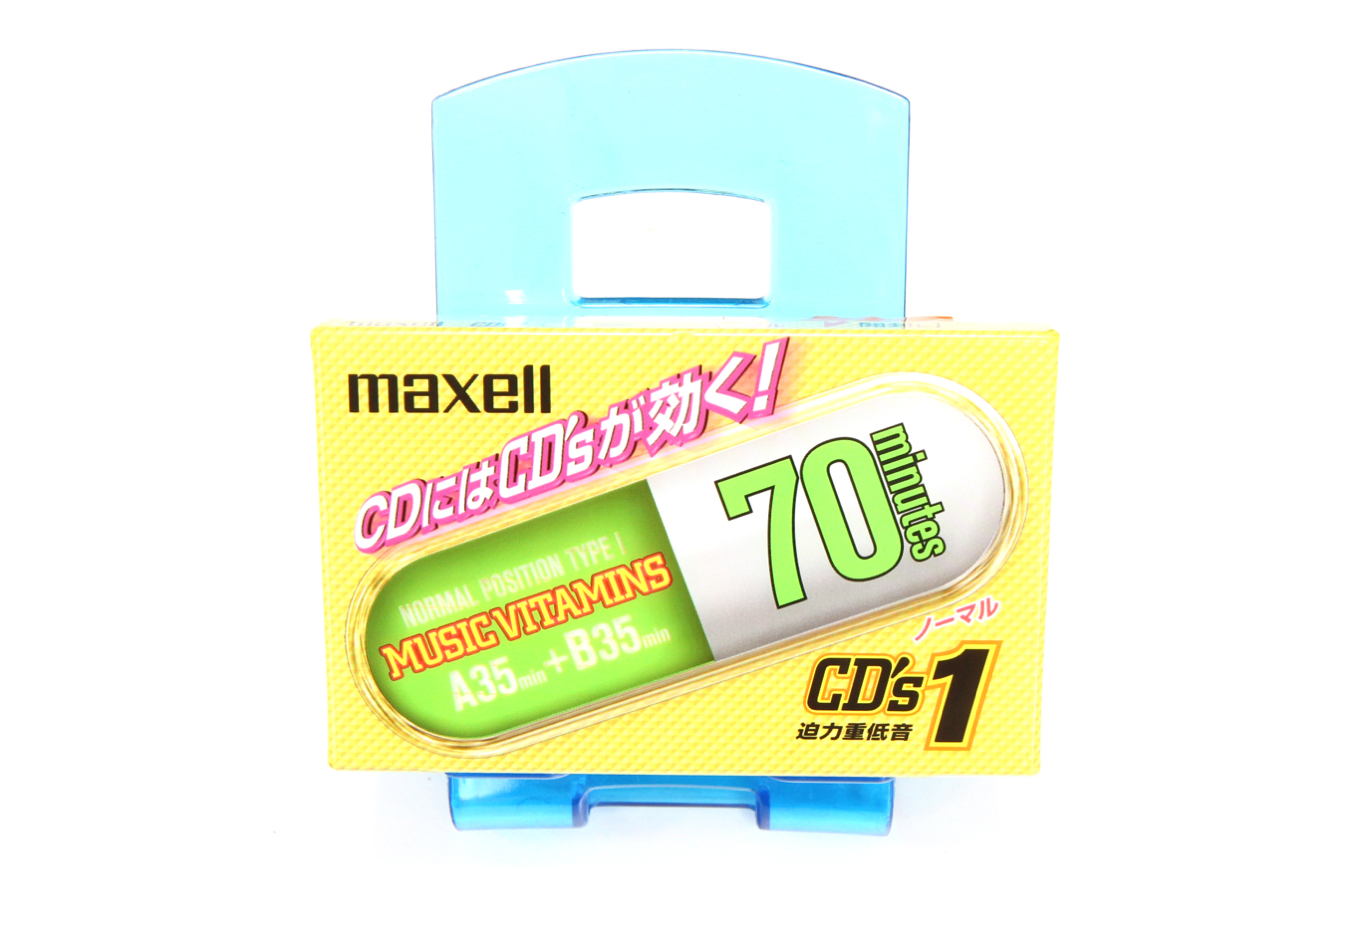 MAXELL CD's1-70 Japan